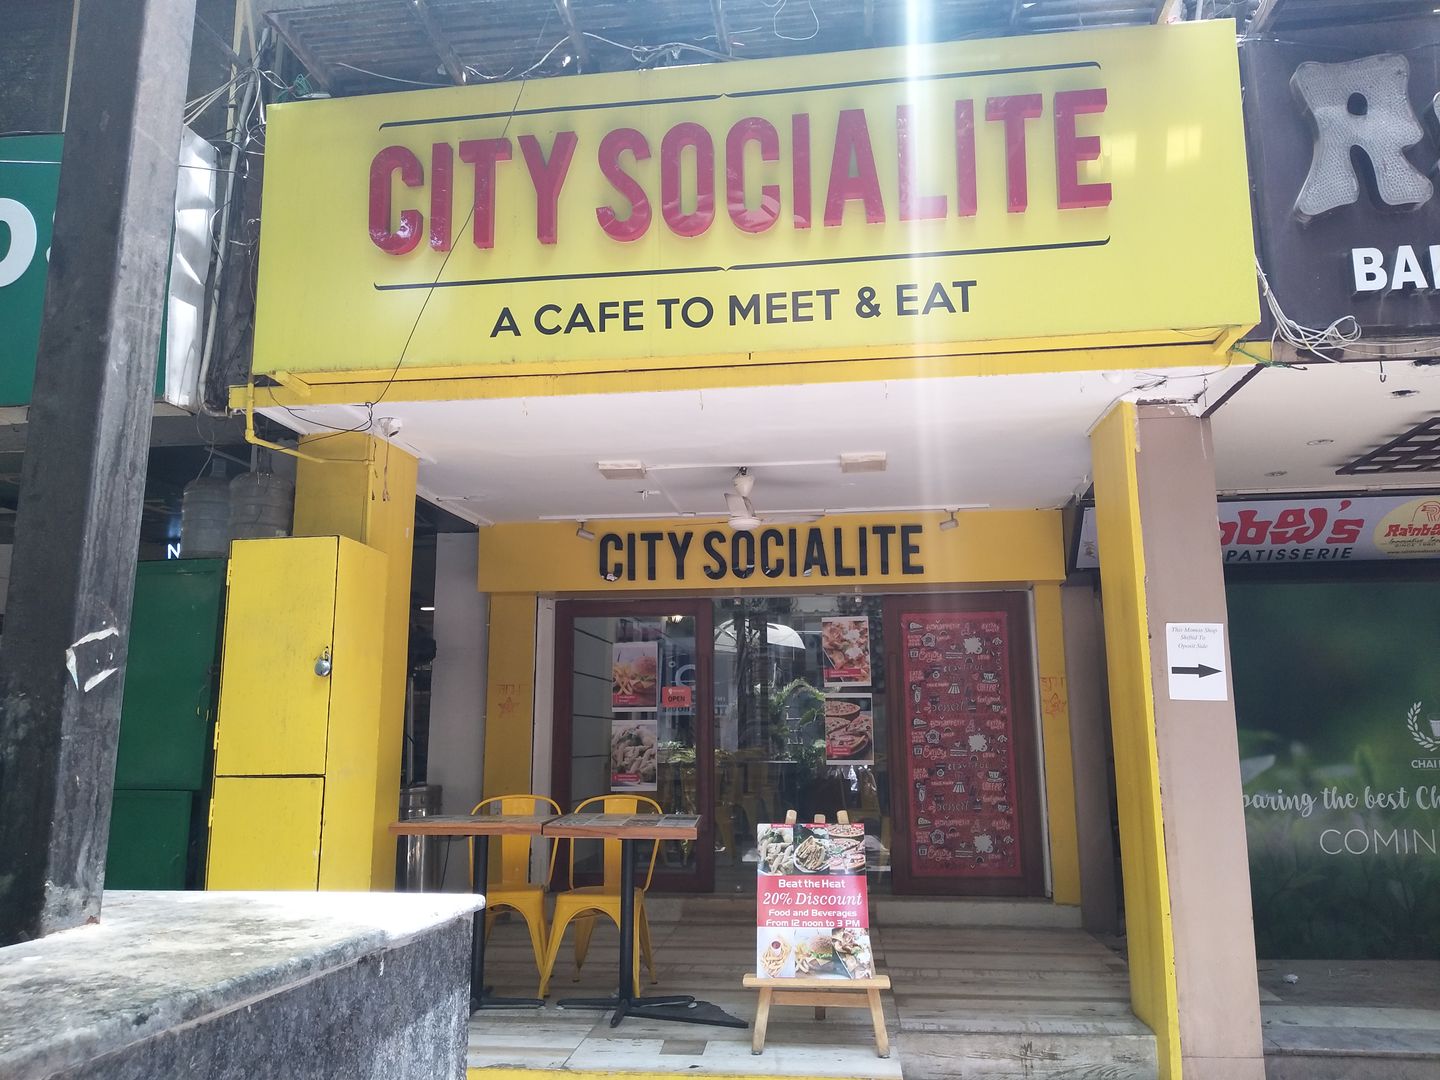 French Chic Cafe Design - City Socialite, Ecoinch Services Private Limited Ecoinch Services Private Limited Deuren Deuren